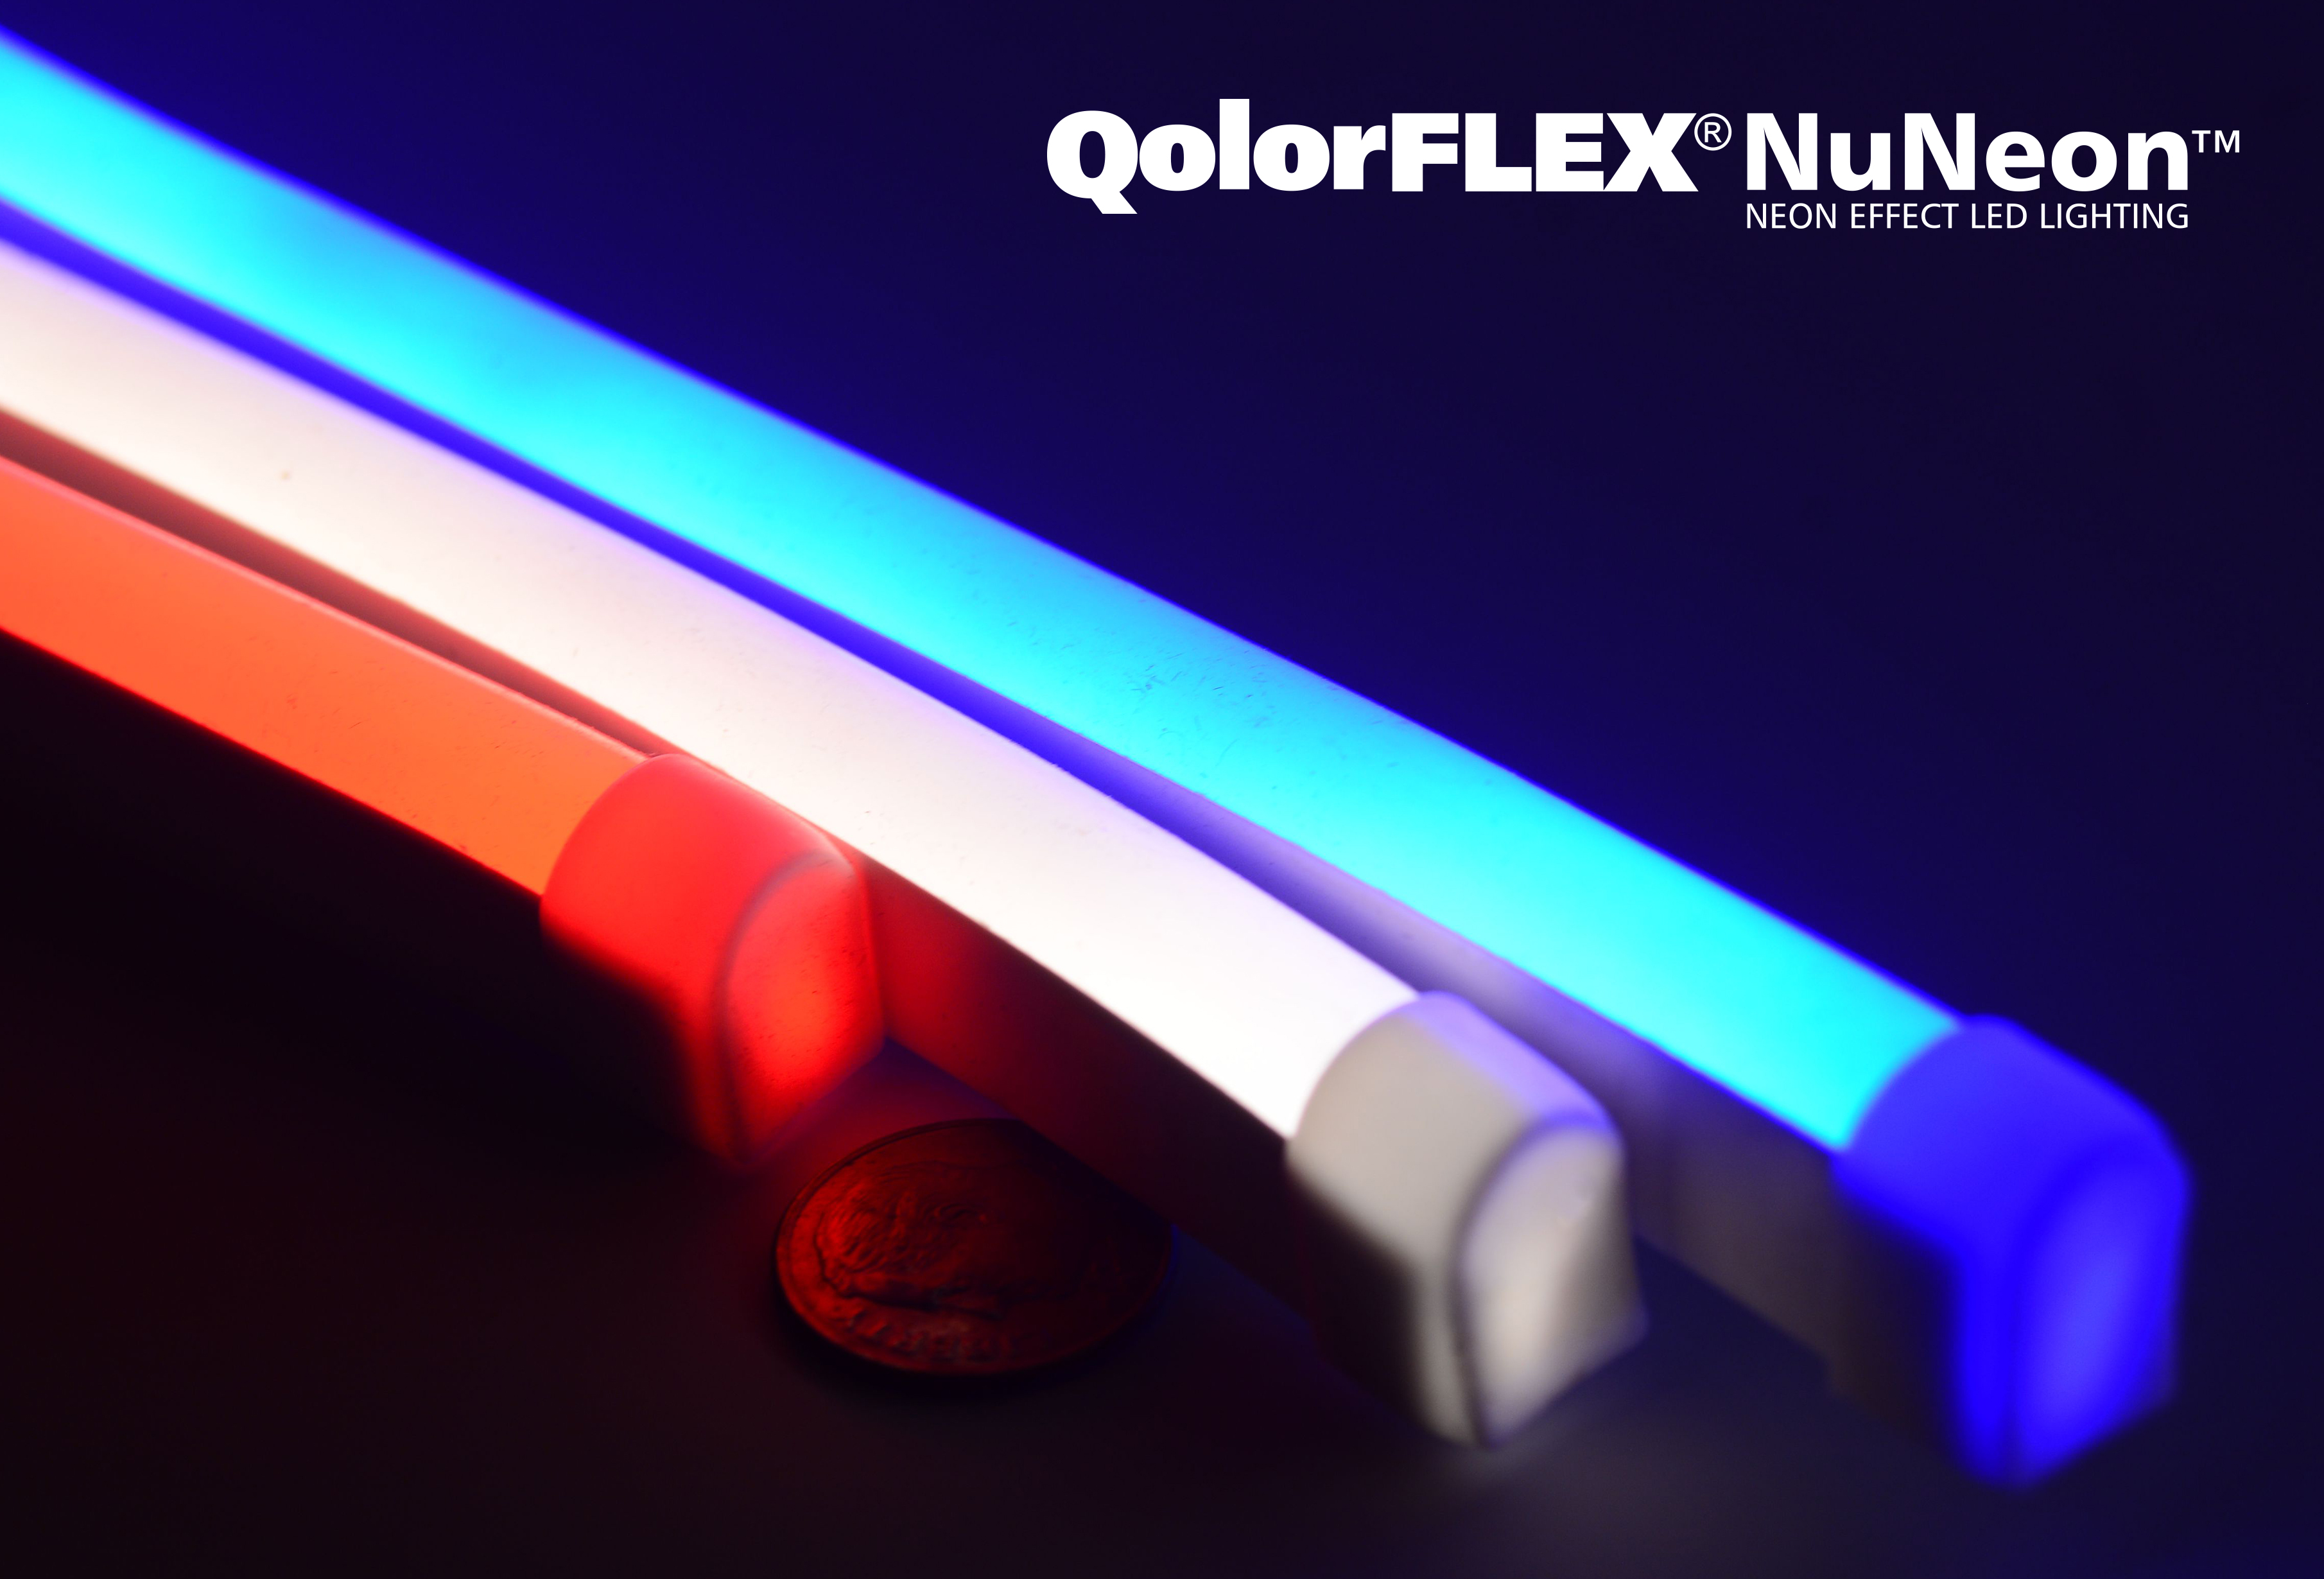 QolorFLEX NuNeon, red white blue in a line